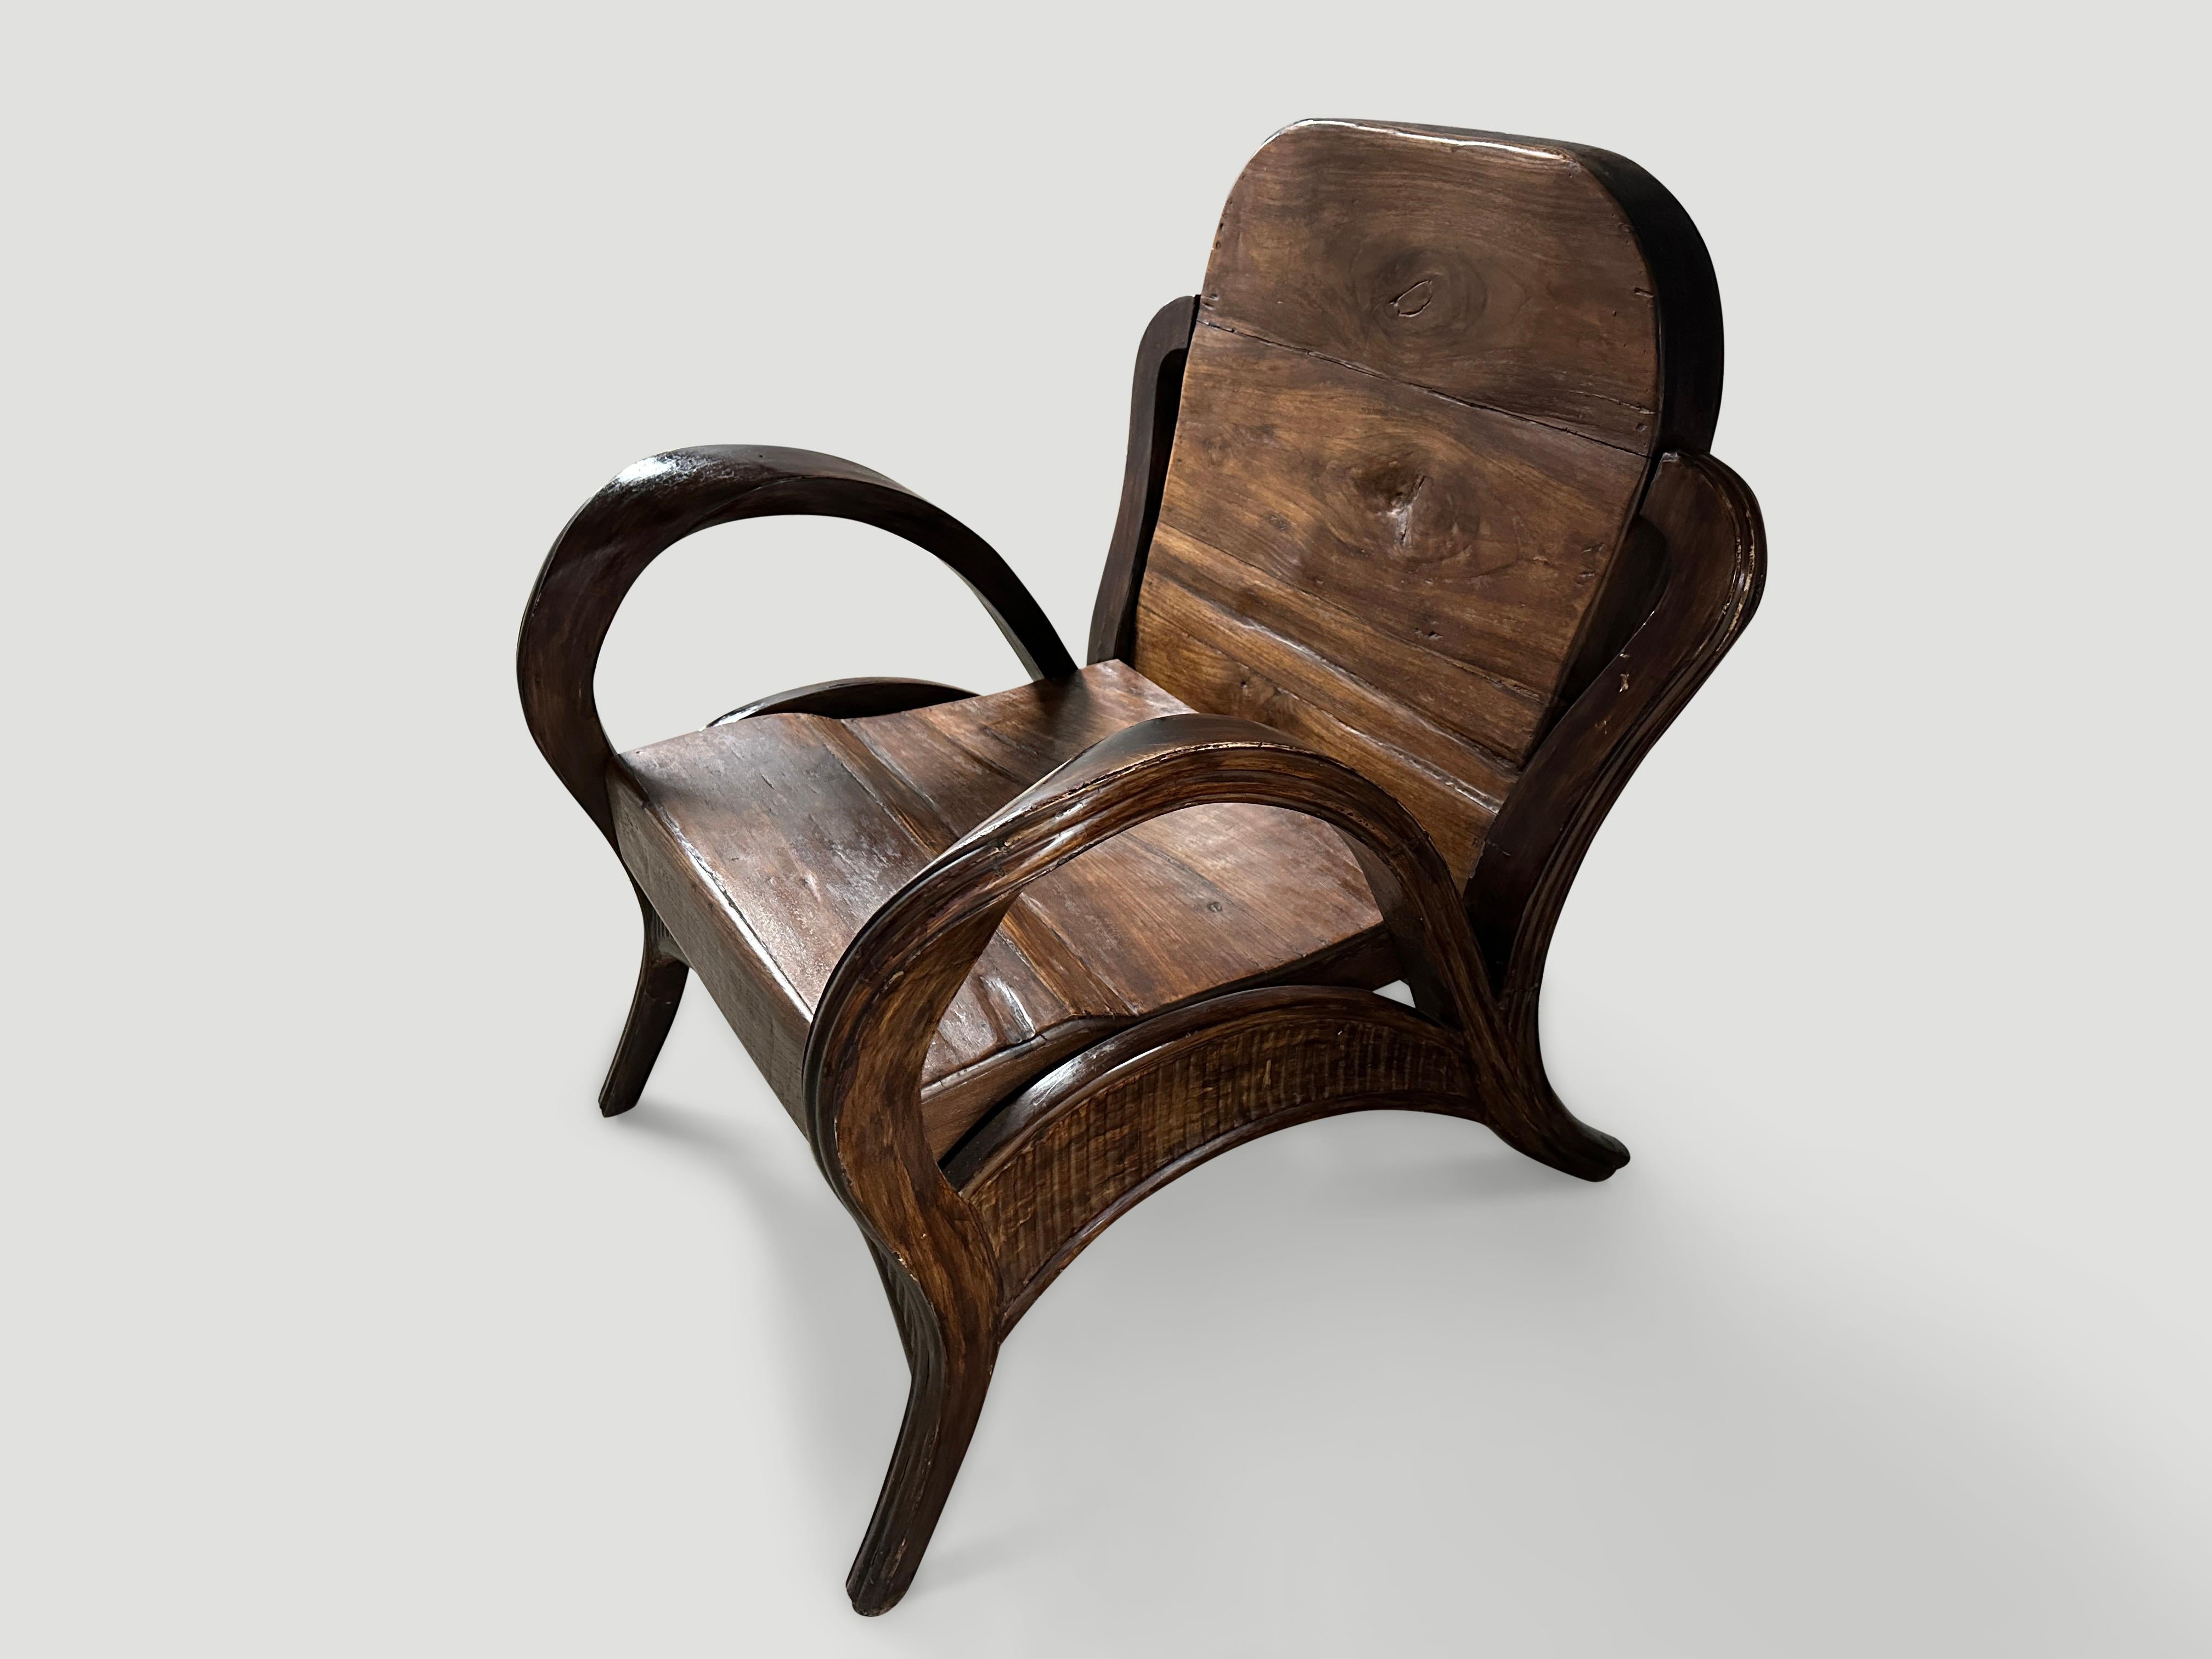 Indonesian Andrianna Shamaris Sculptural Antique Teak Wood Arm Chair For Sale